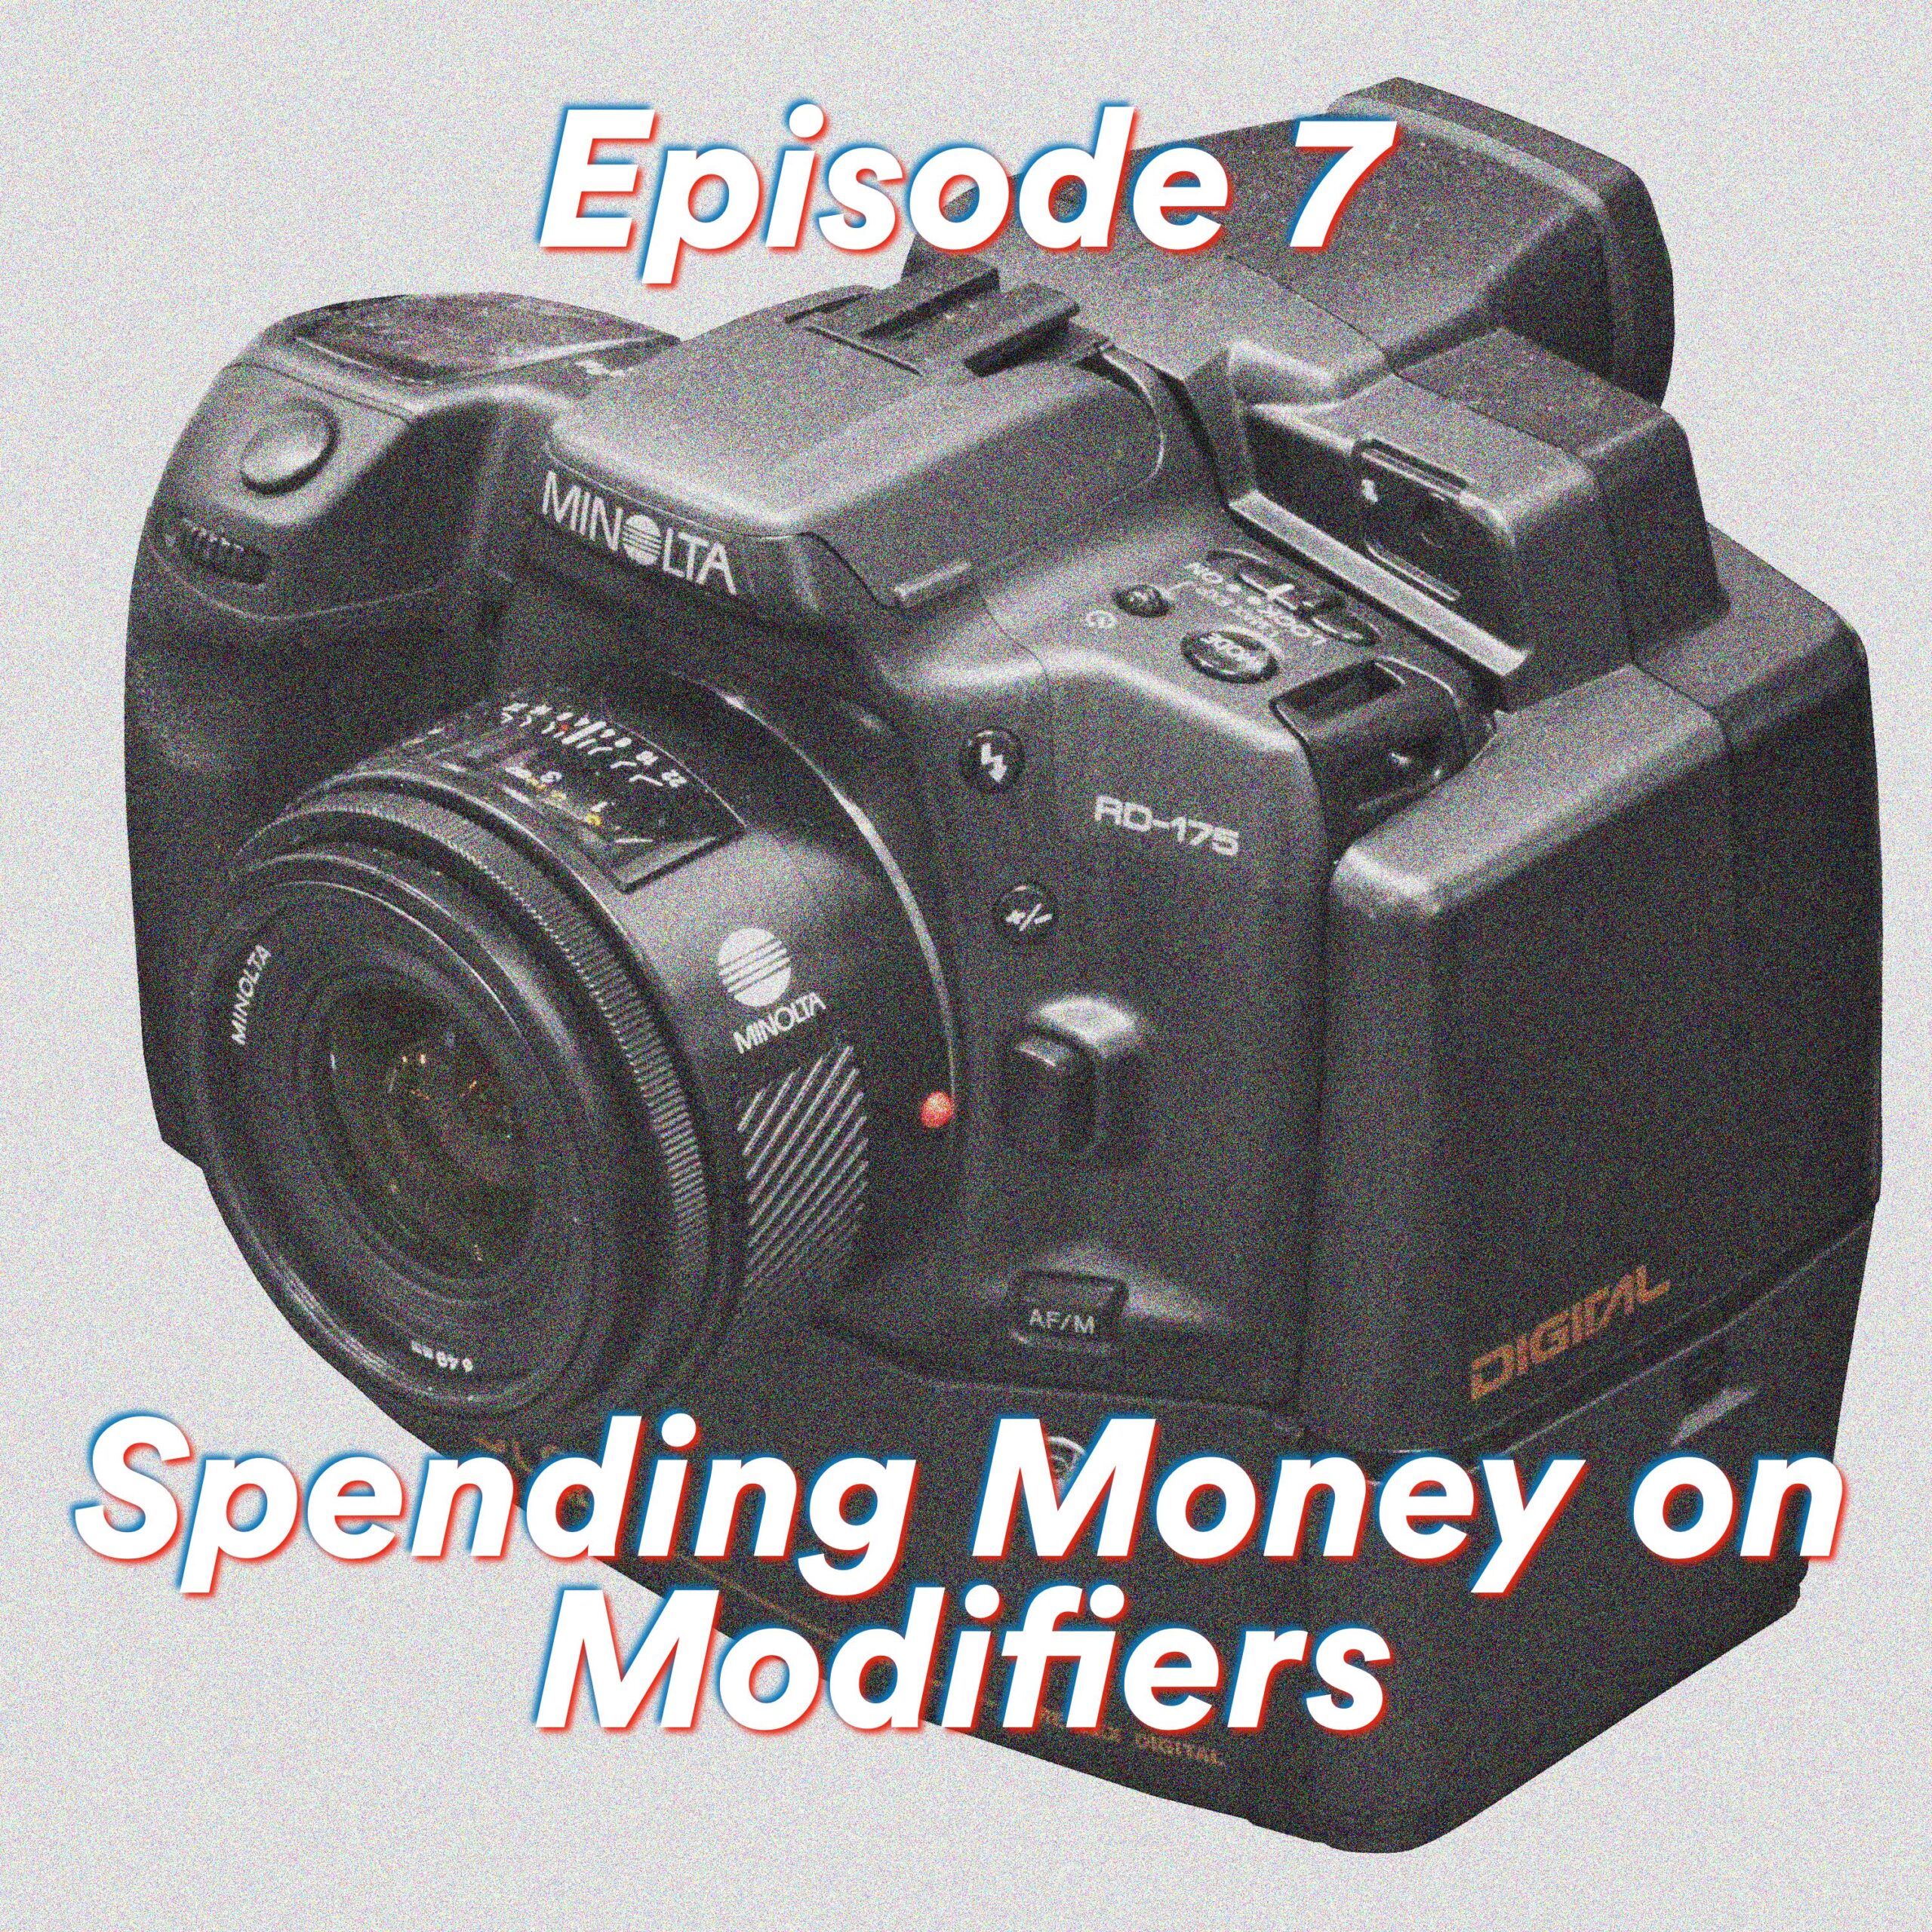 Episode 7: Spending Money on Modifiers